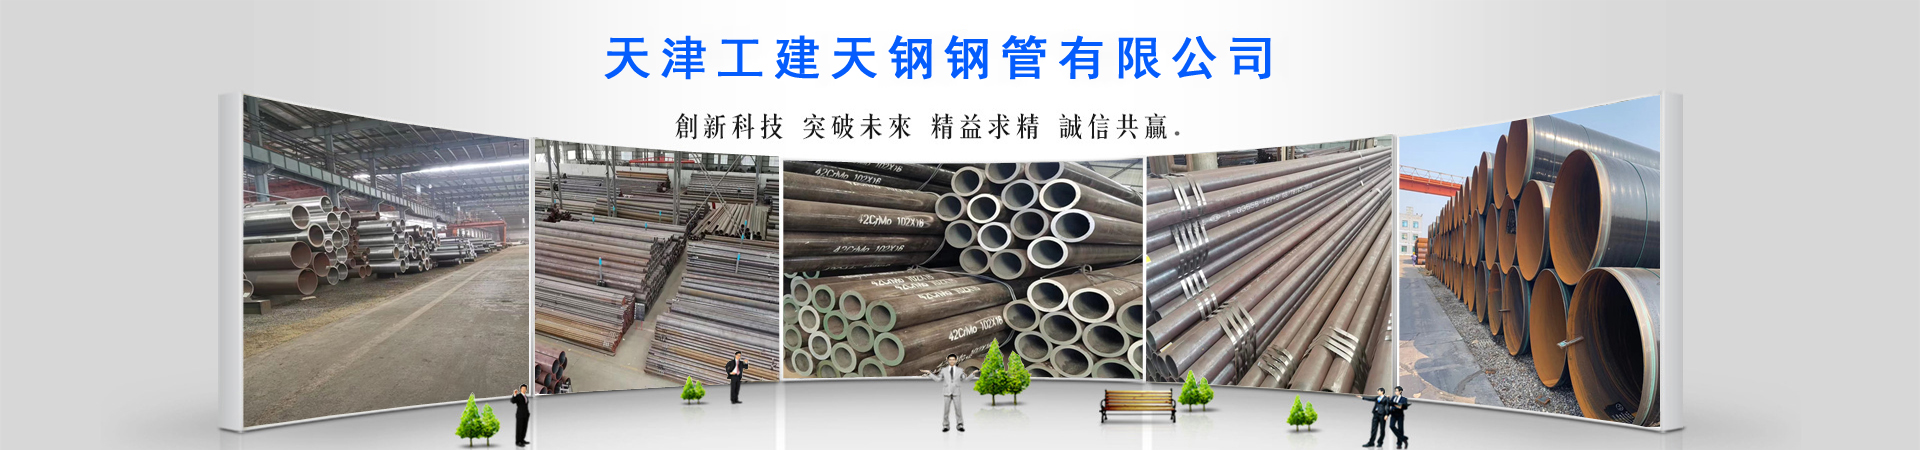 42crmo厚壁无缝钢管、上海本地42crmo厚壁无缝钢管、上海、上海42crmo厚壁无缝钢管